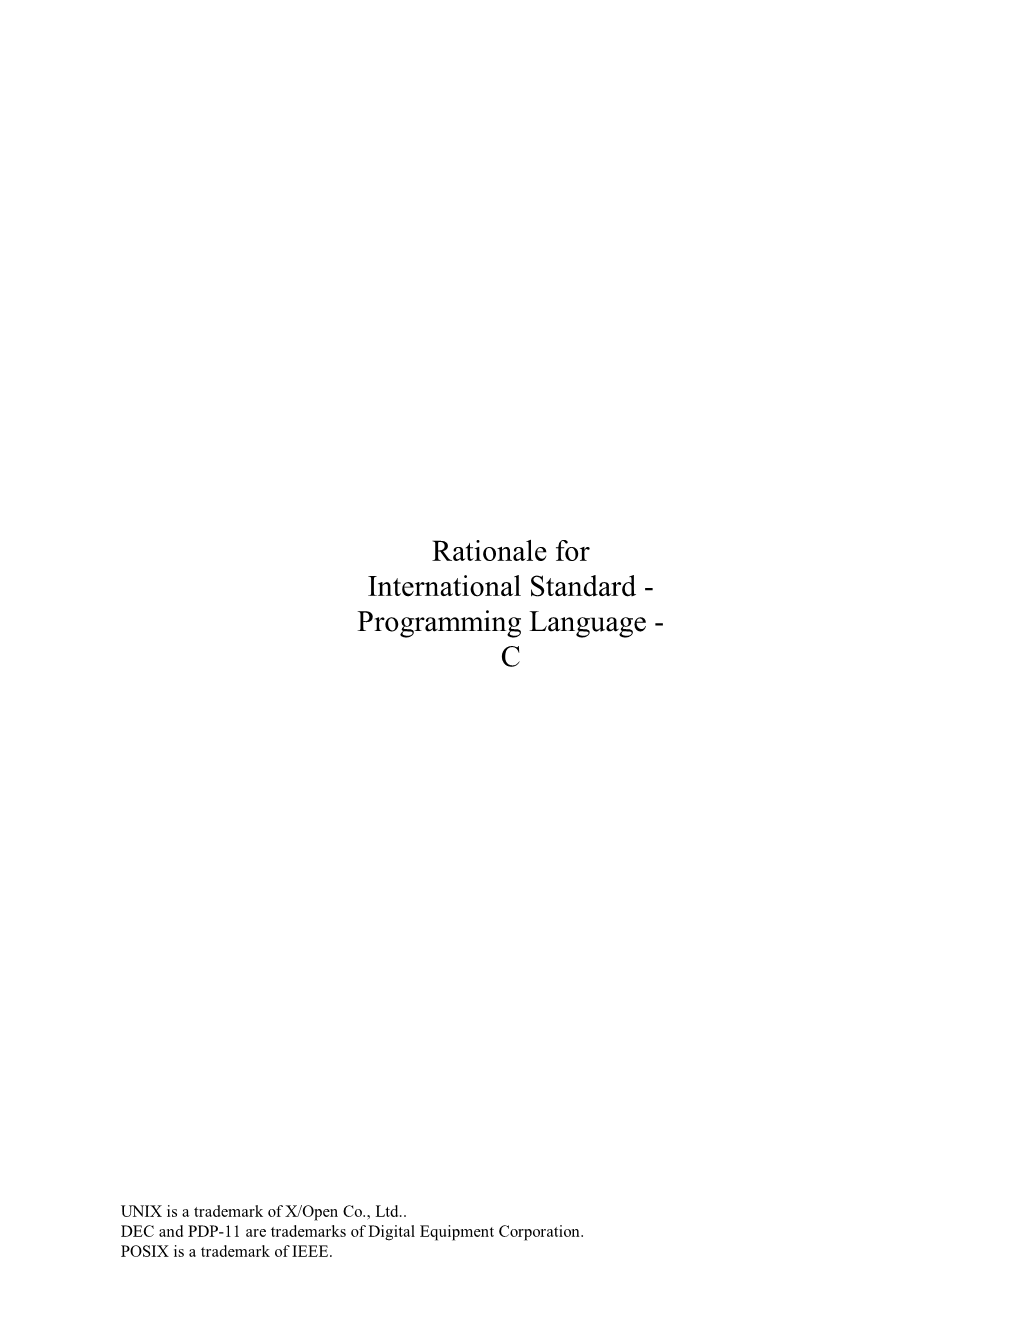 Rationale for International Standard - Programming Language - C